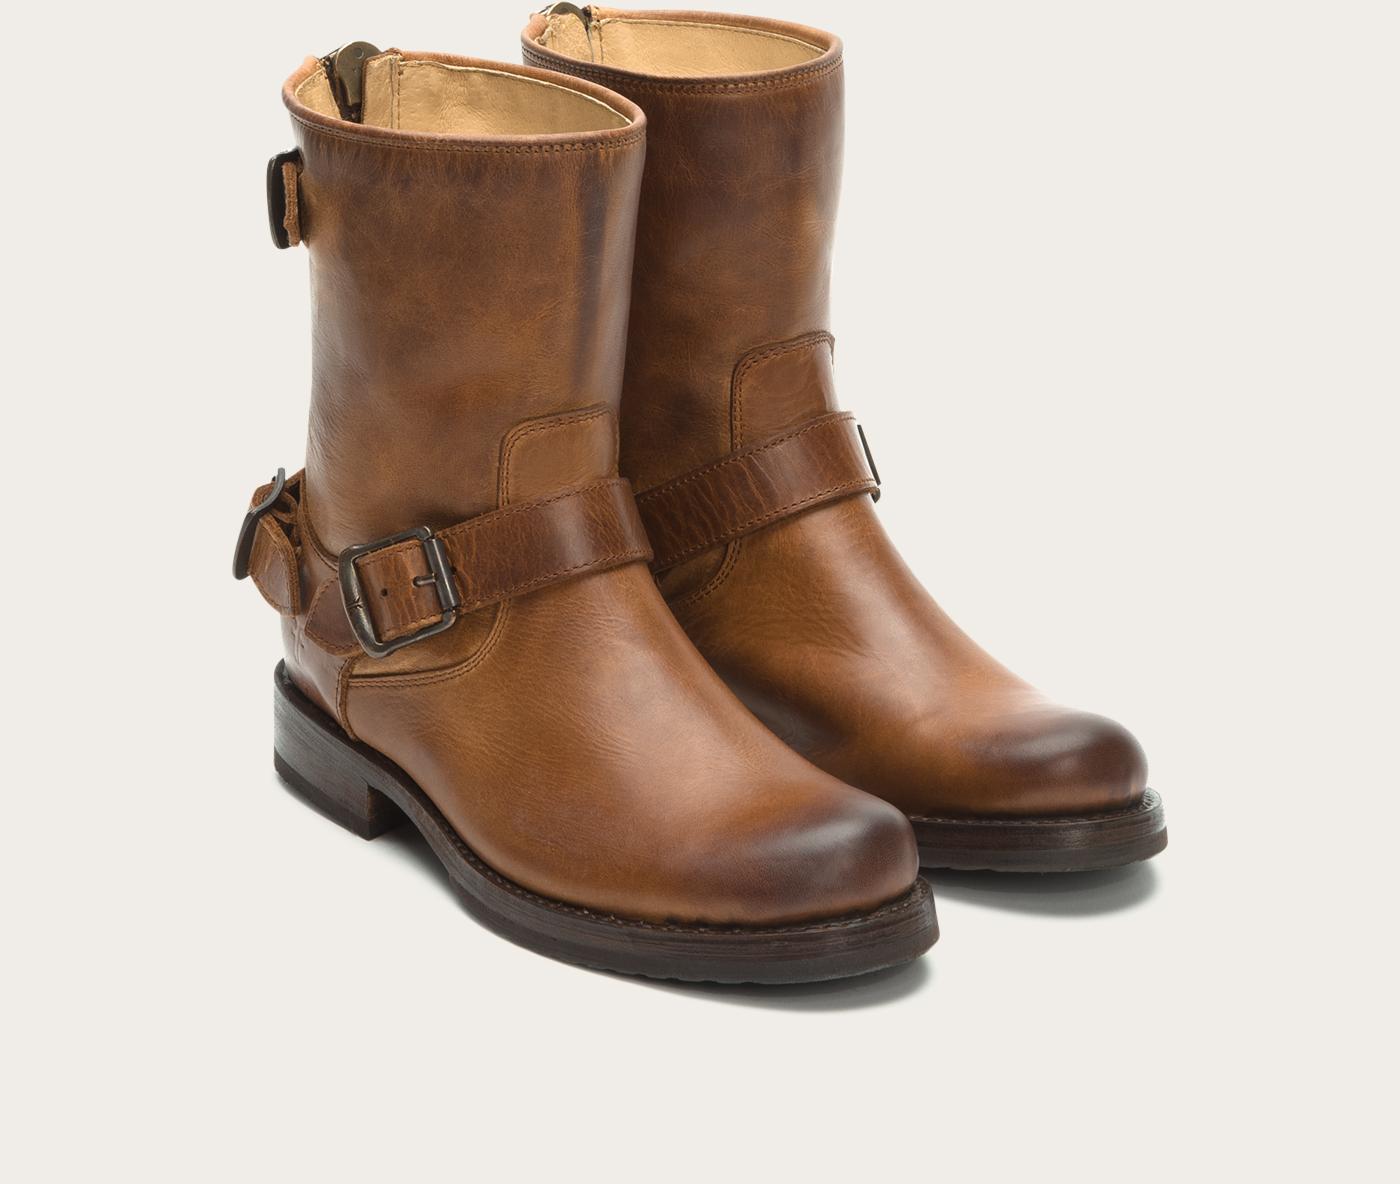 Frye Veronica Back Zip Short Boots | Frye Since 1863 in Brown - Lyst